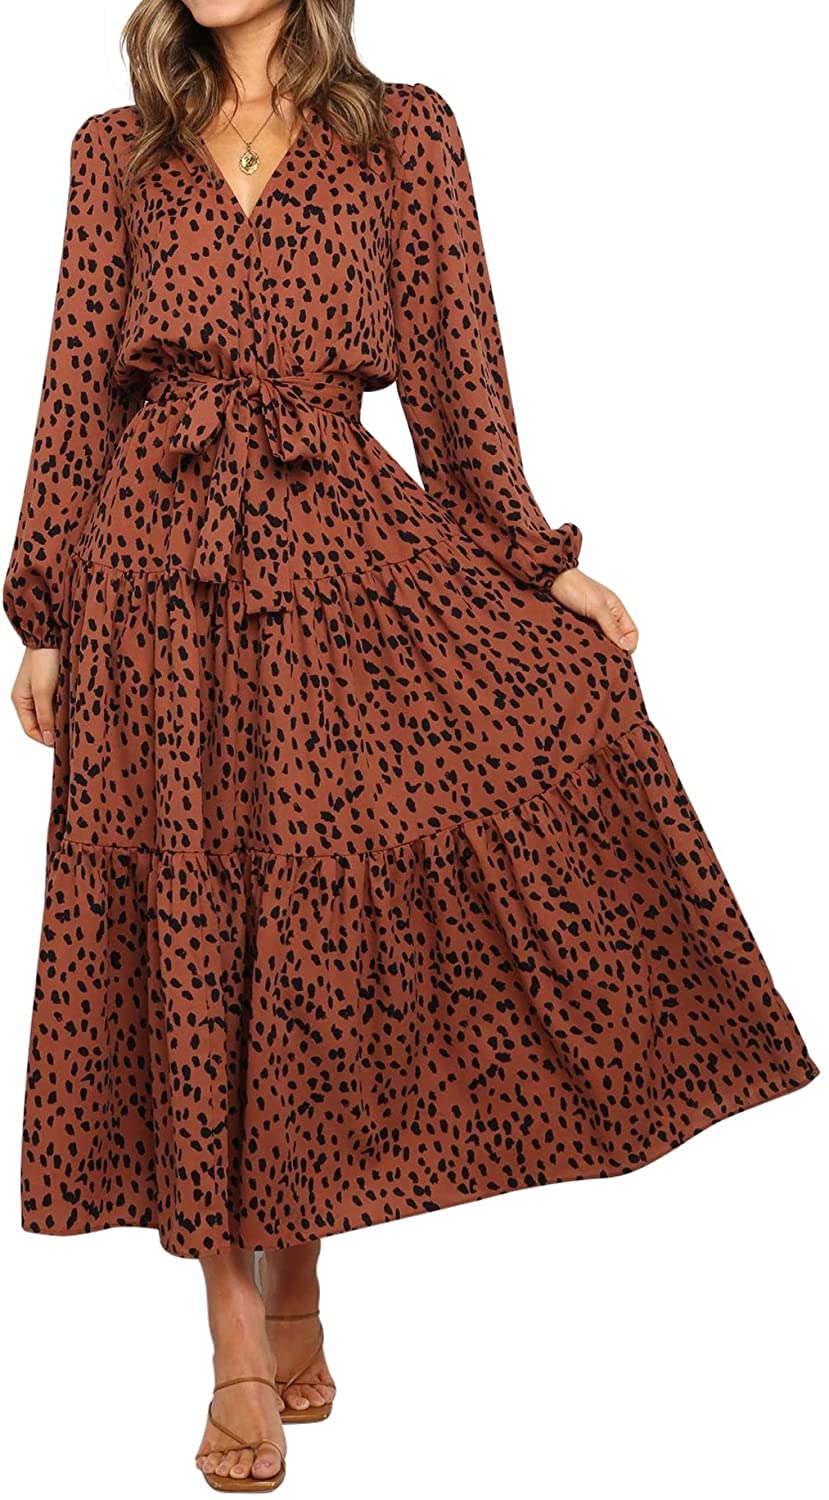 R.Vivimos Women's Fall Cotton Long Sleeves Irregular Polka Dot V Neck  Casual Flo | eBay